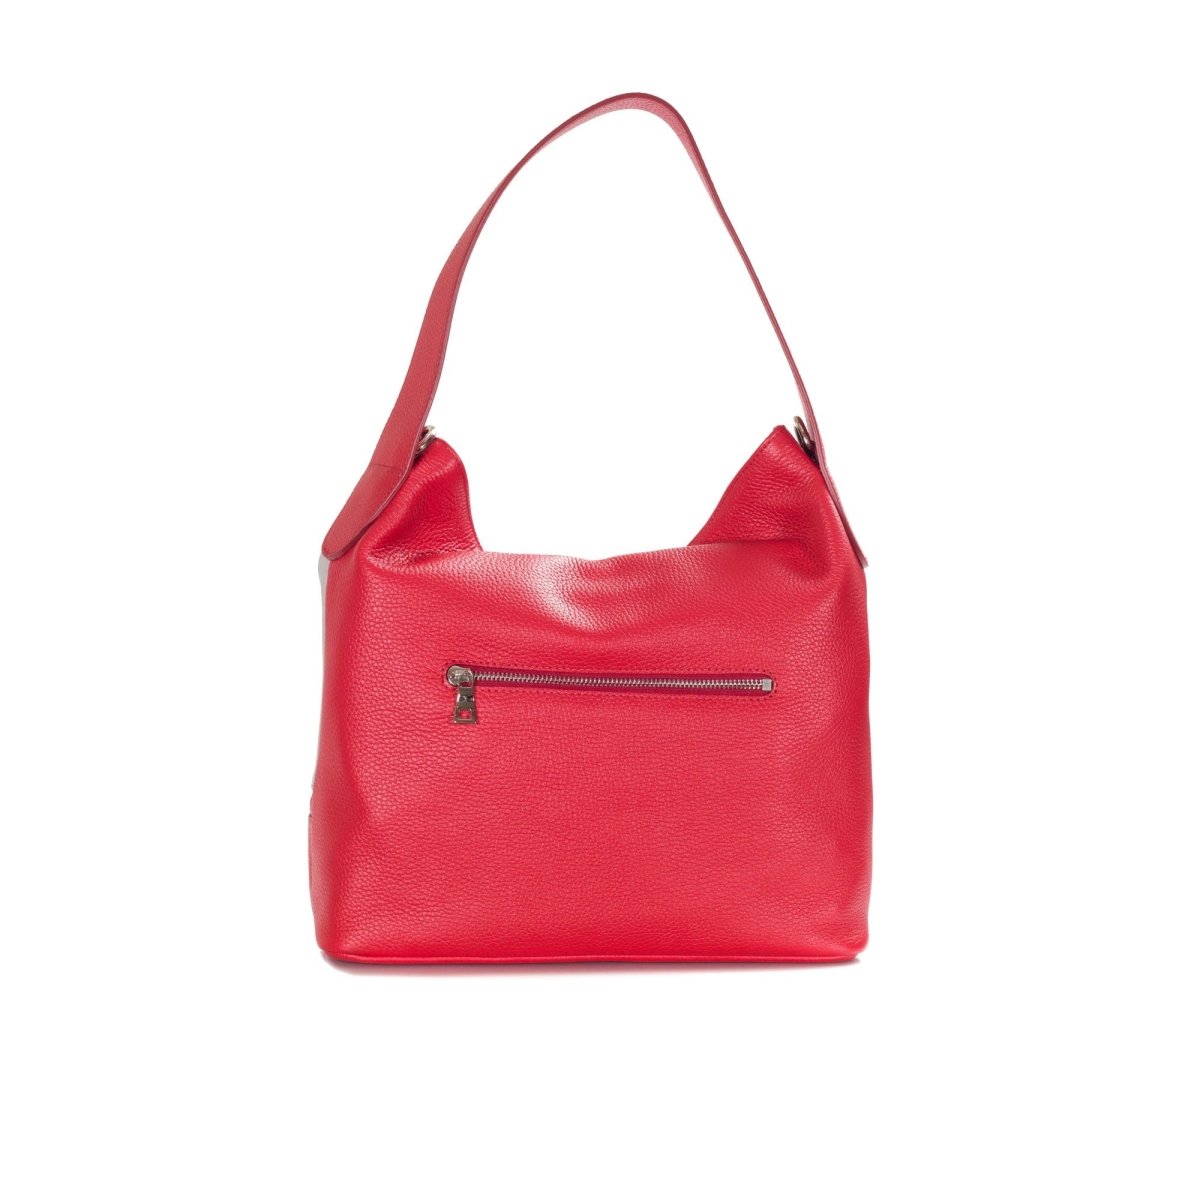 Pippa Premium Pebbled Mix Colour Leather Hobo Shoulder Handbag - Ozzell London